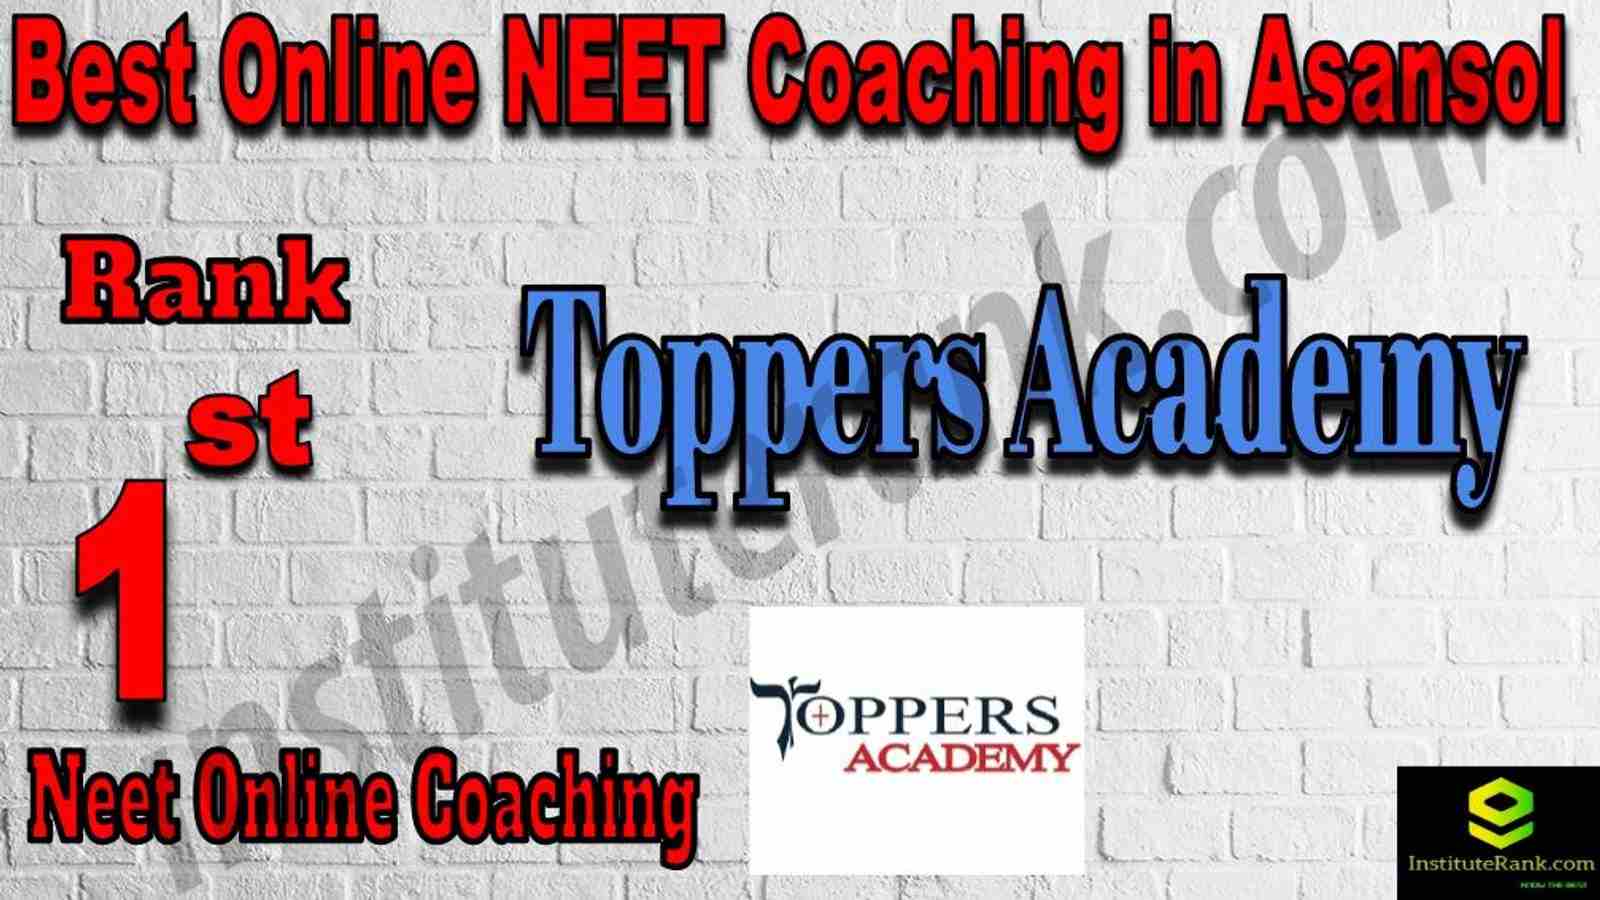 1st Best Online Neet Coaching in Asansol